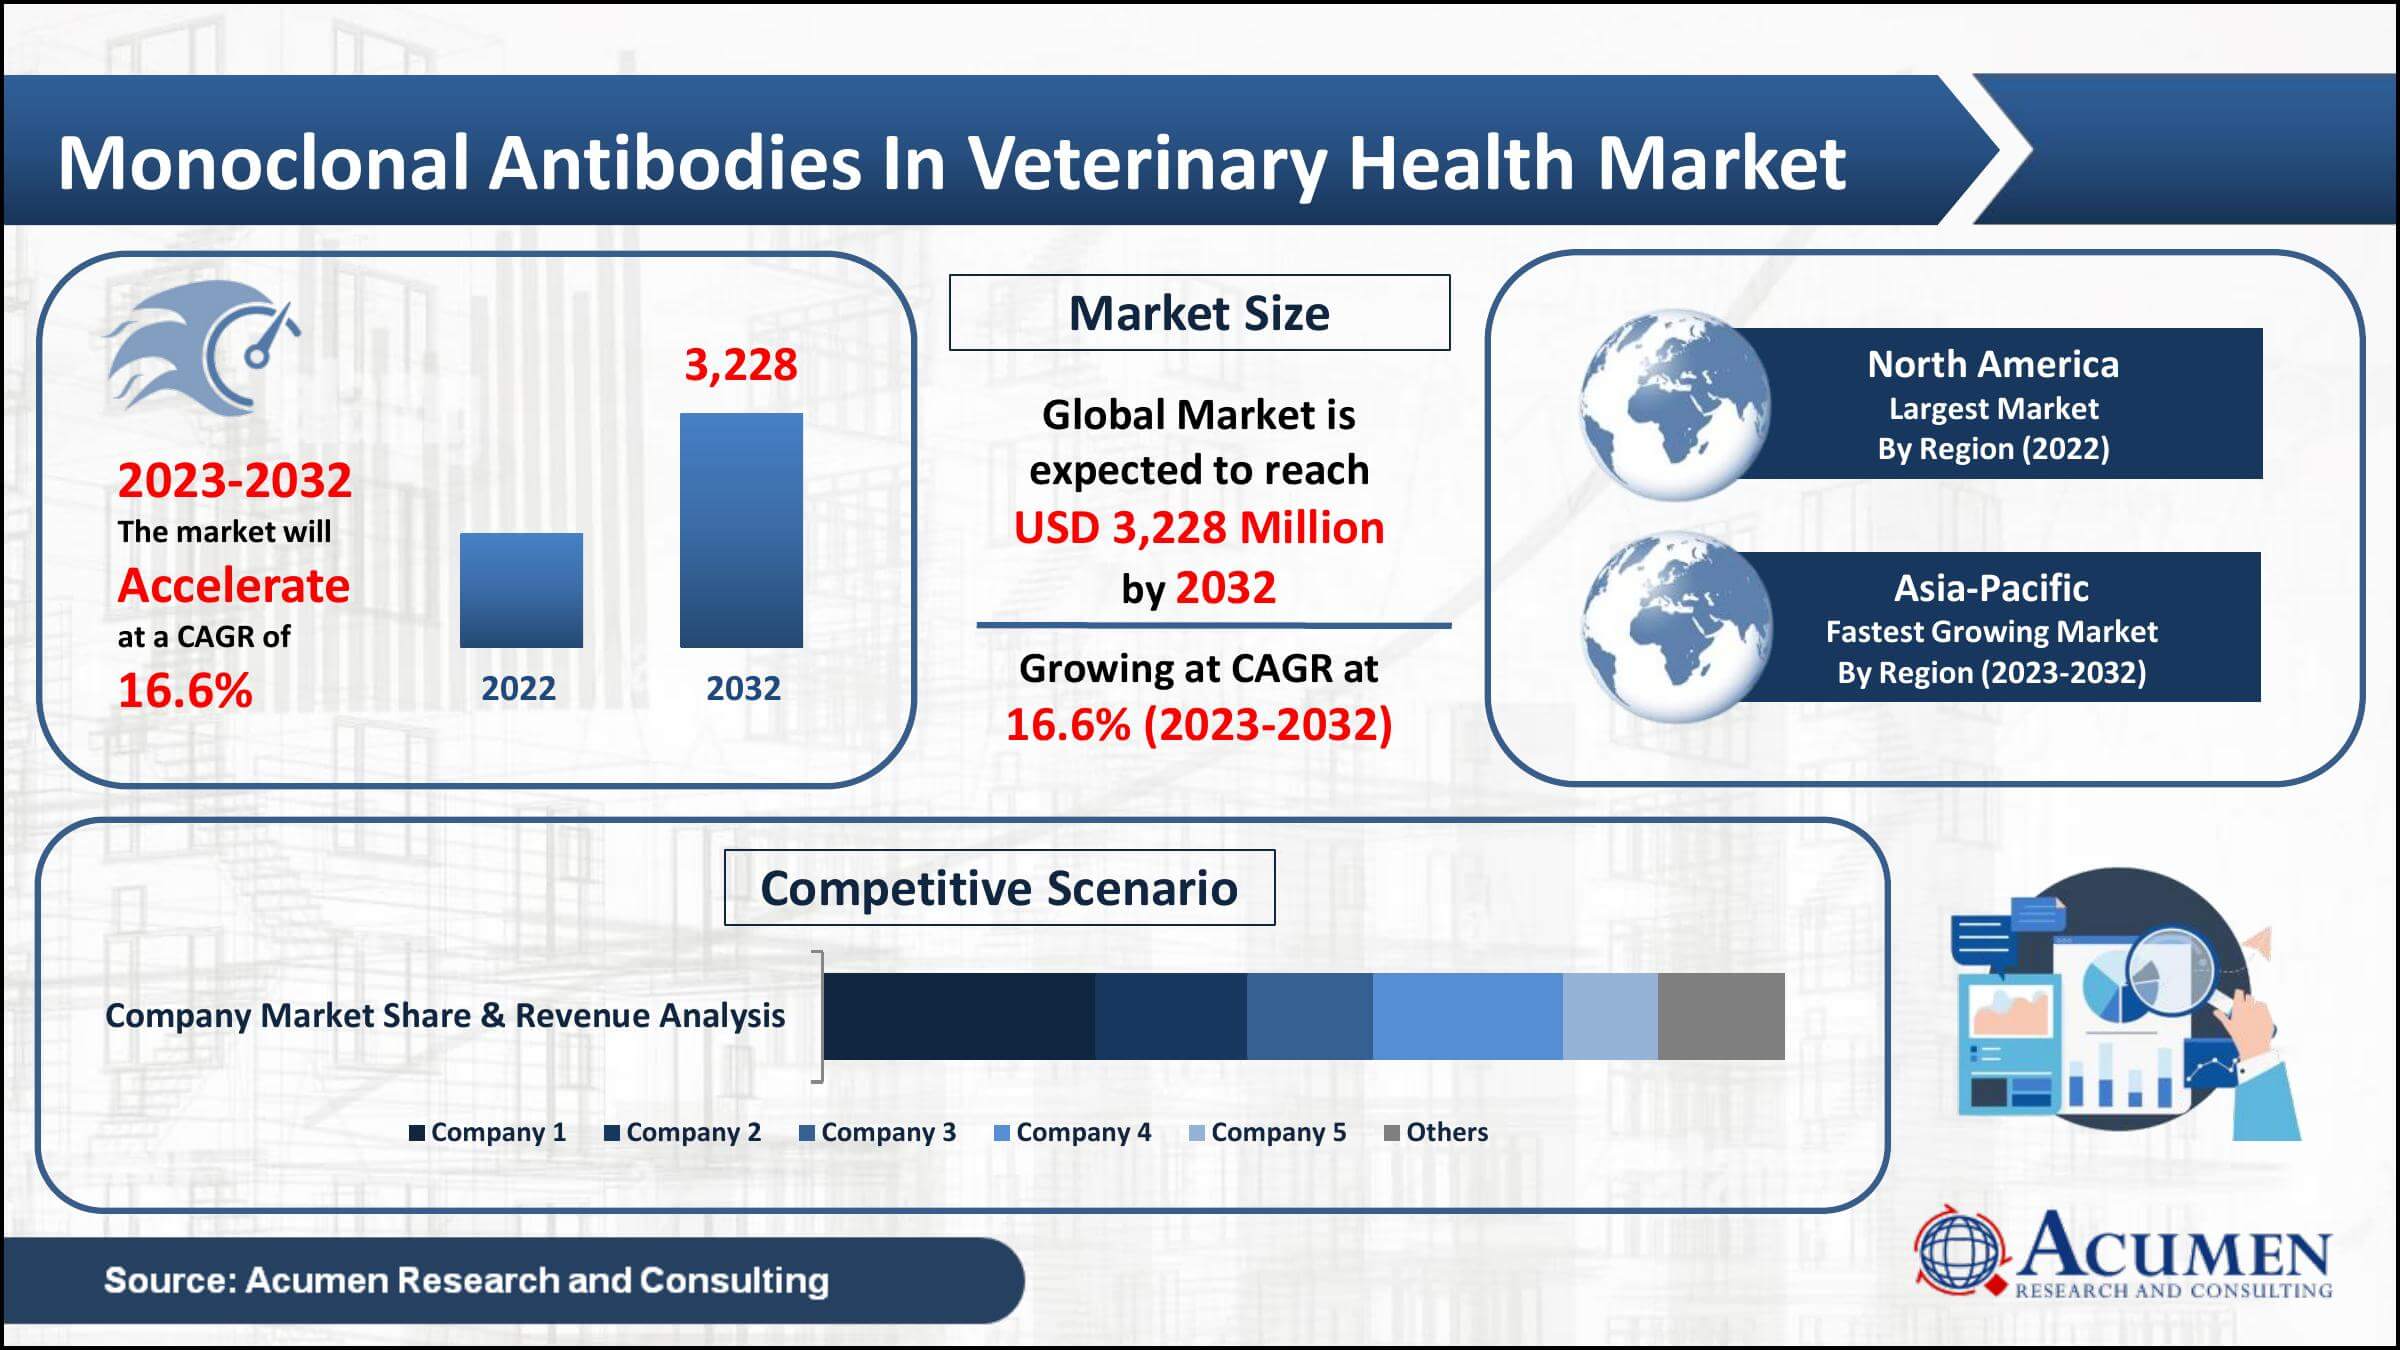 Monoclonal Antibodies in Veterinary Health Market value